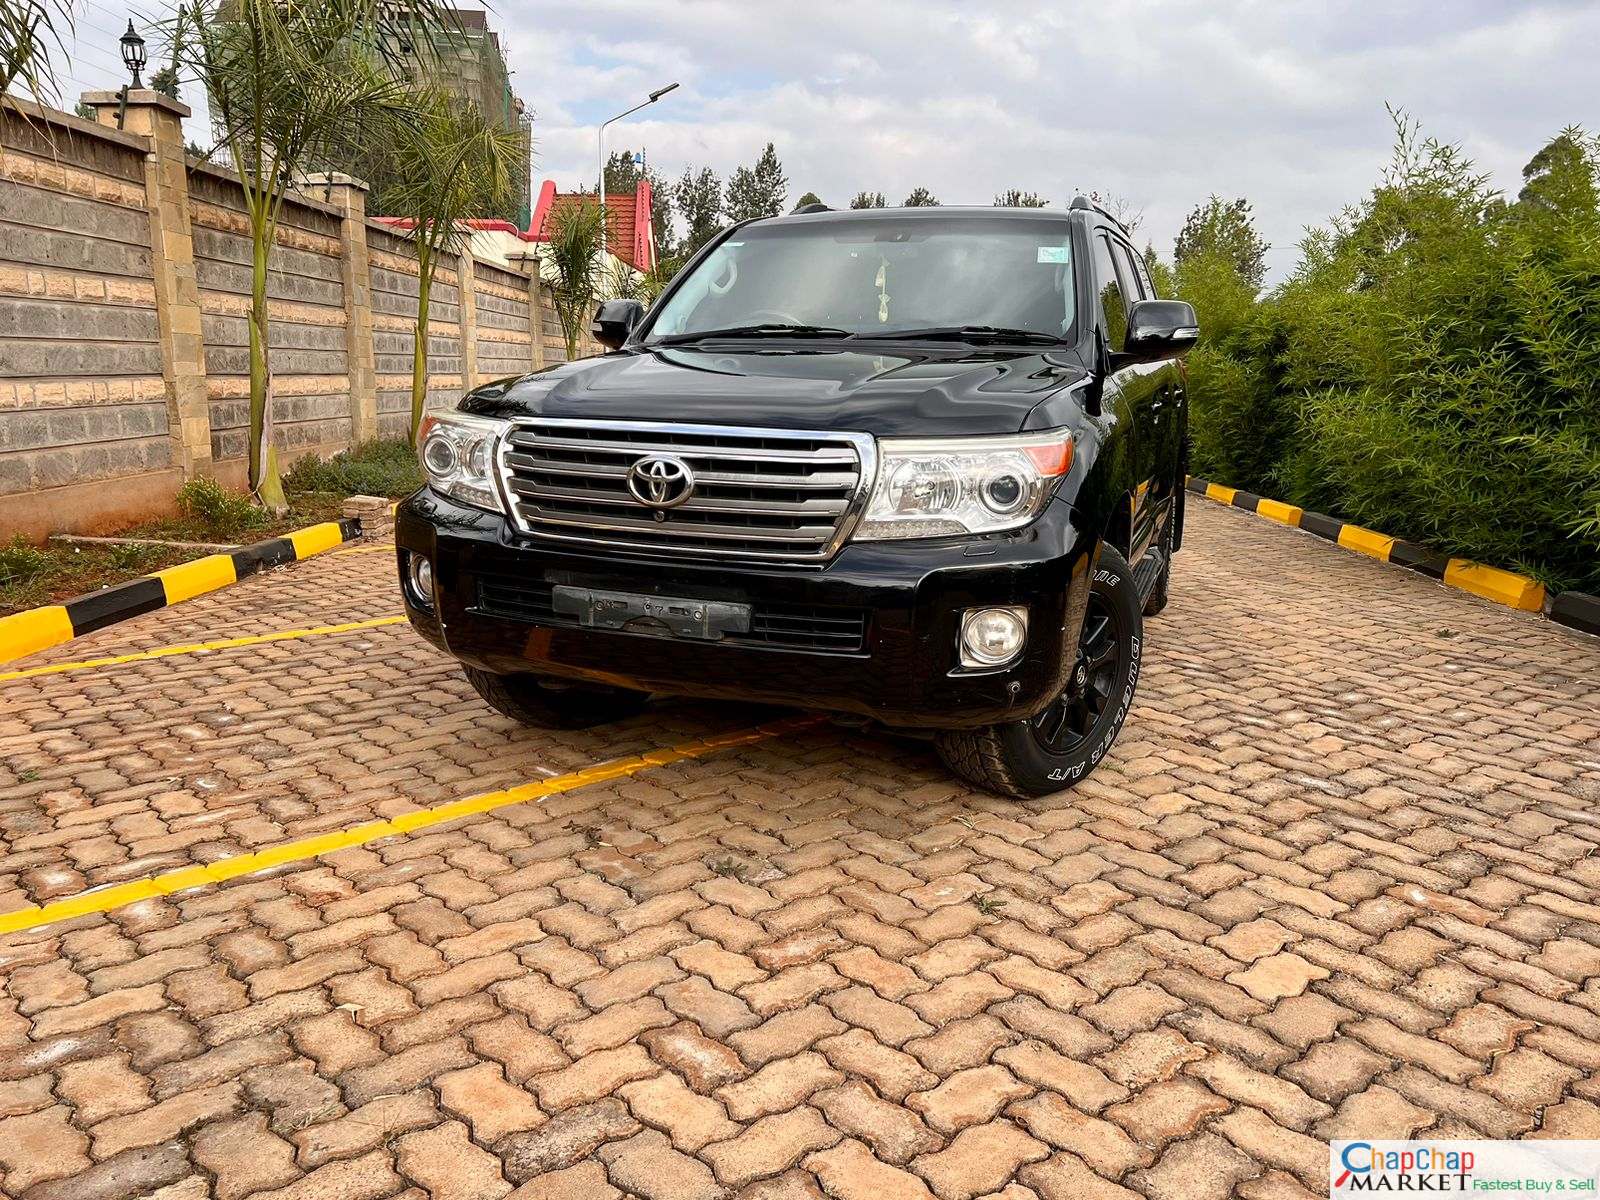 Toyota Land Cruiser V8 DIESEL for sale in Kenya VX 200 SERIES You Pay 30% Deposit Trade in Ok EXCLUSIVE